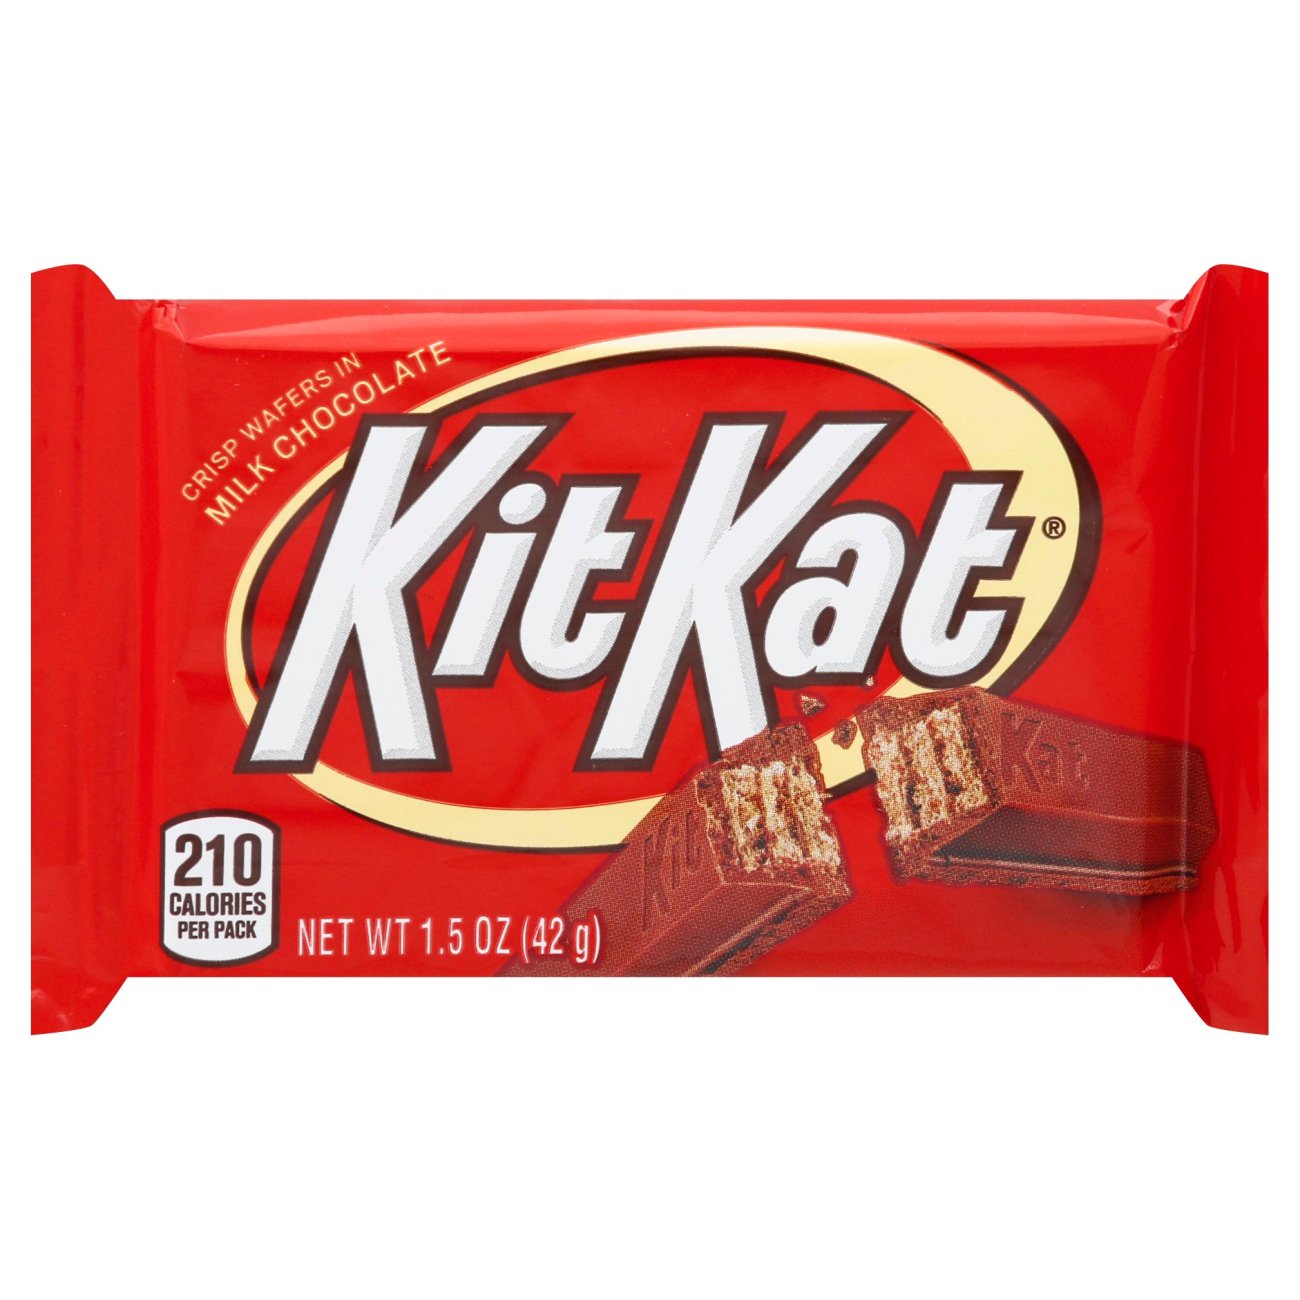 5. Kit Kat 